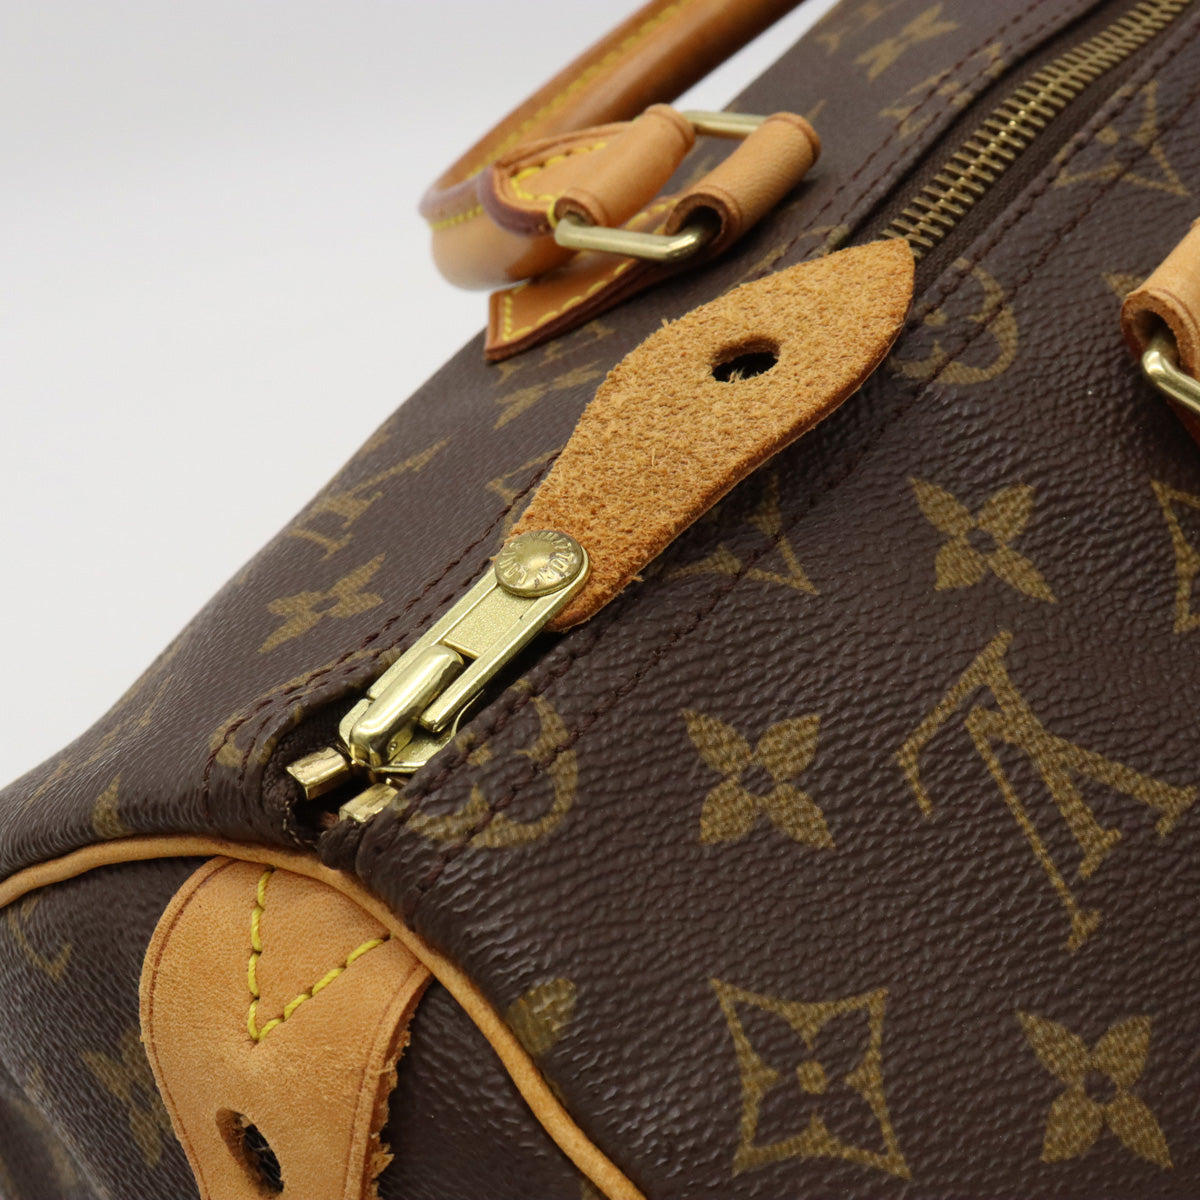 Authenticated Used Louis Vuitton Speedy 35 Monogram M41524 Handbag